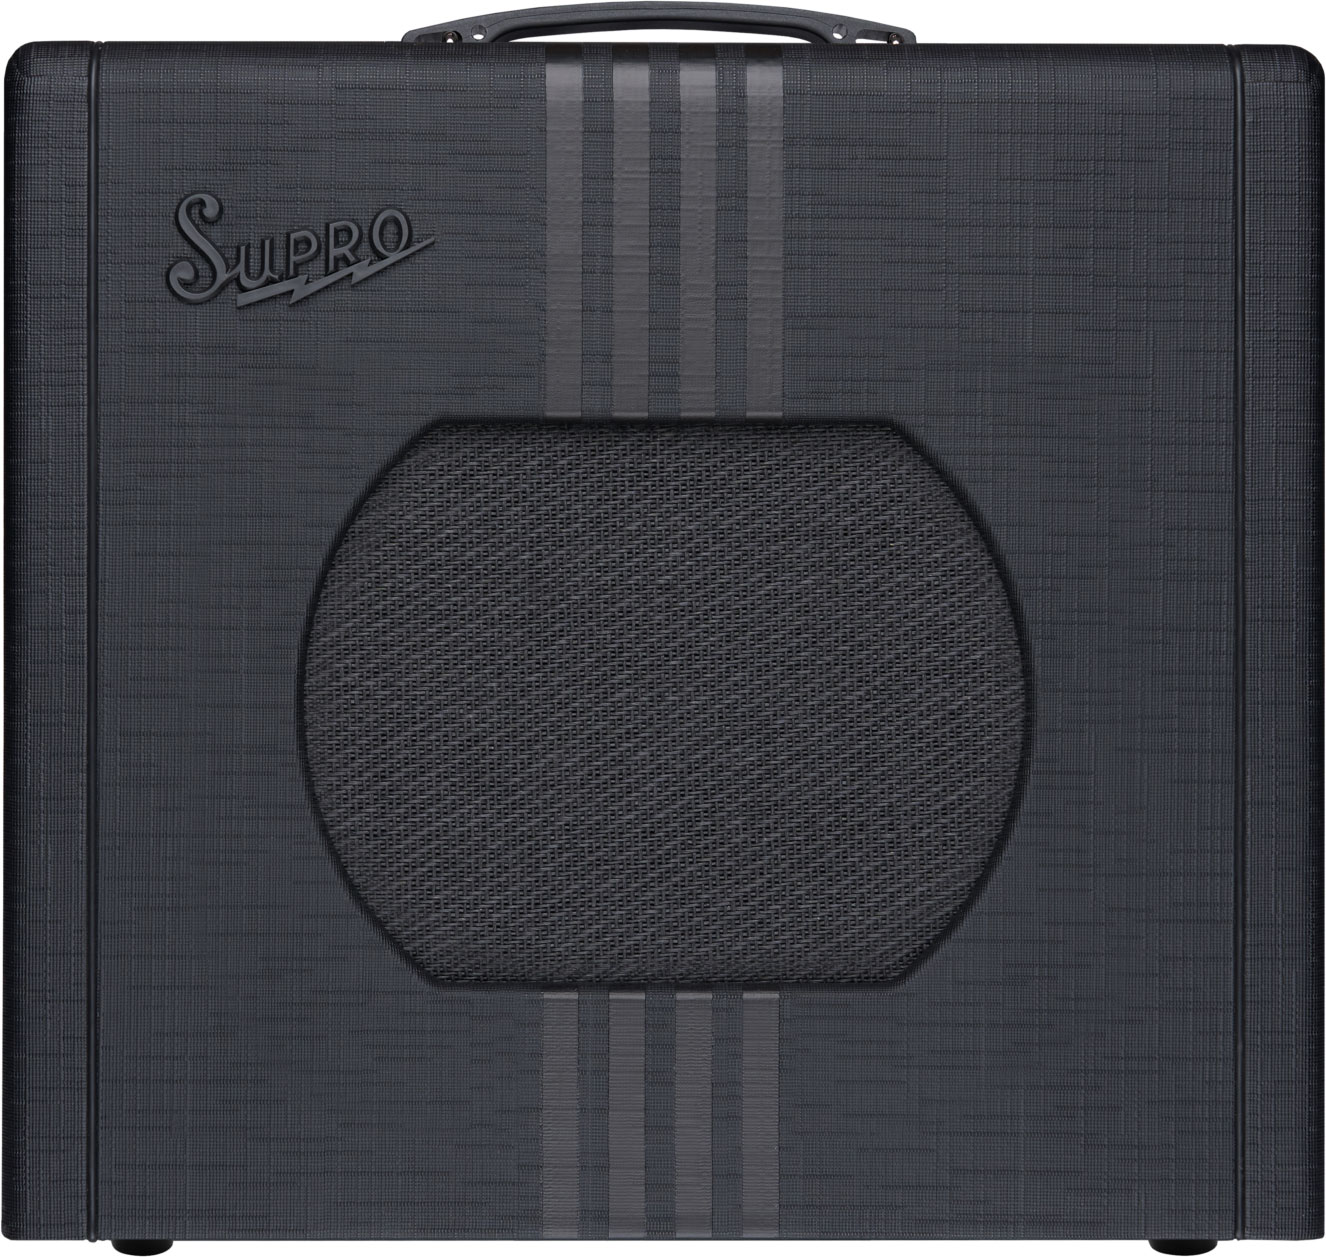 Supro Delta King 10 Combo 5w 1x10 Black/black - Combo amplificador para guitarra eléctrica - Variation 1